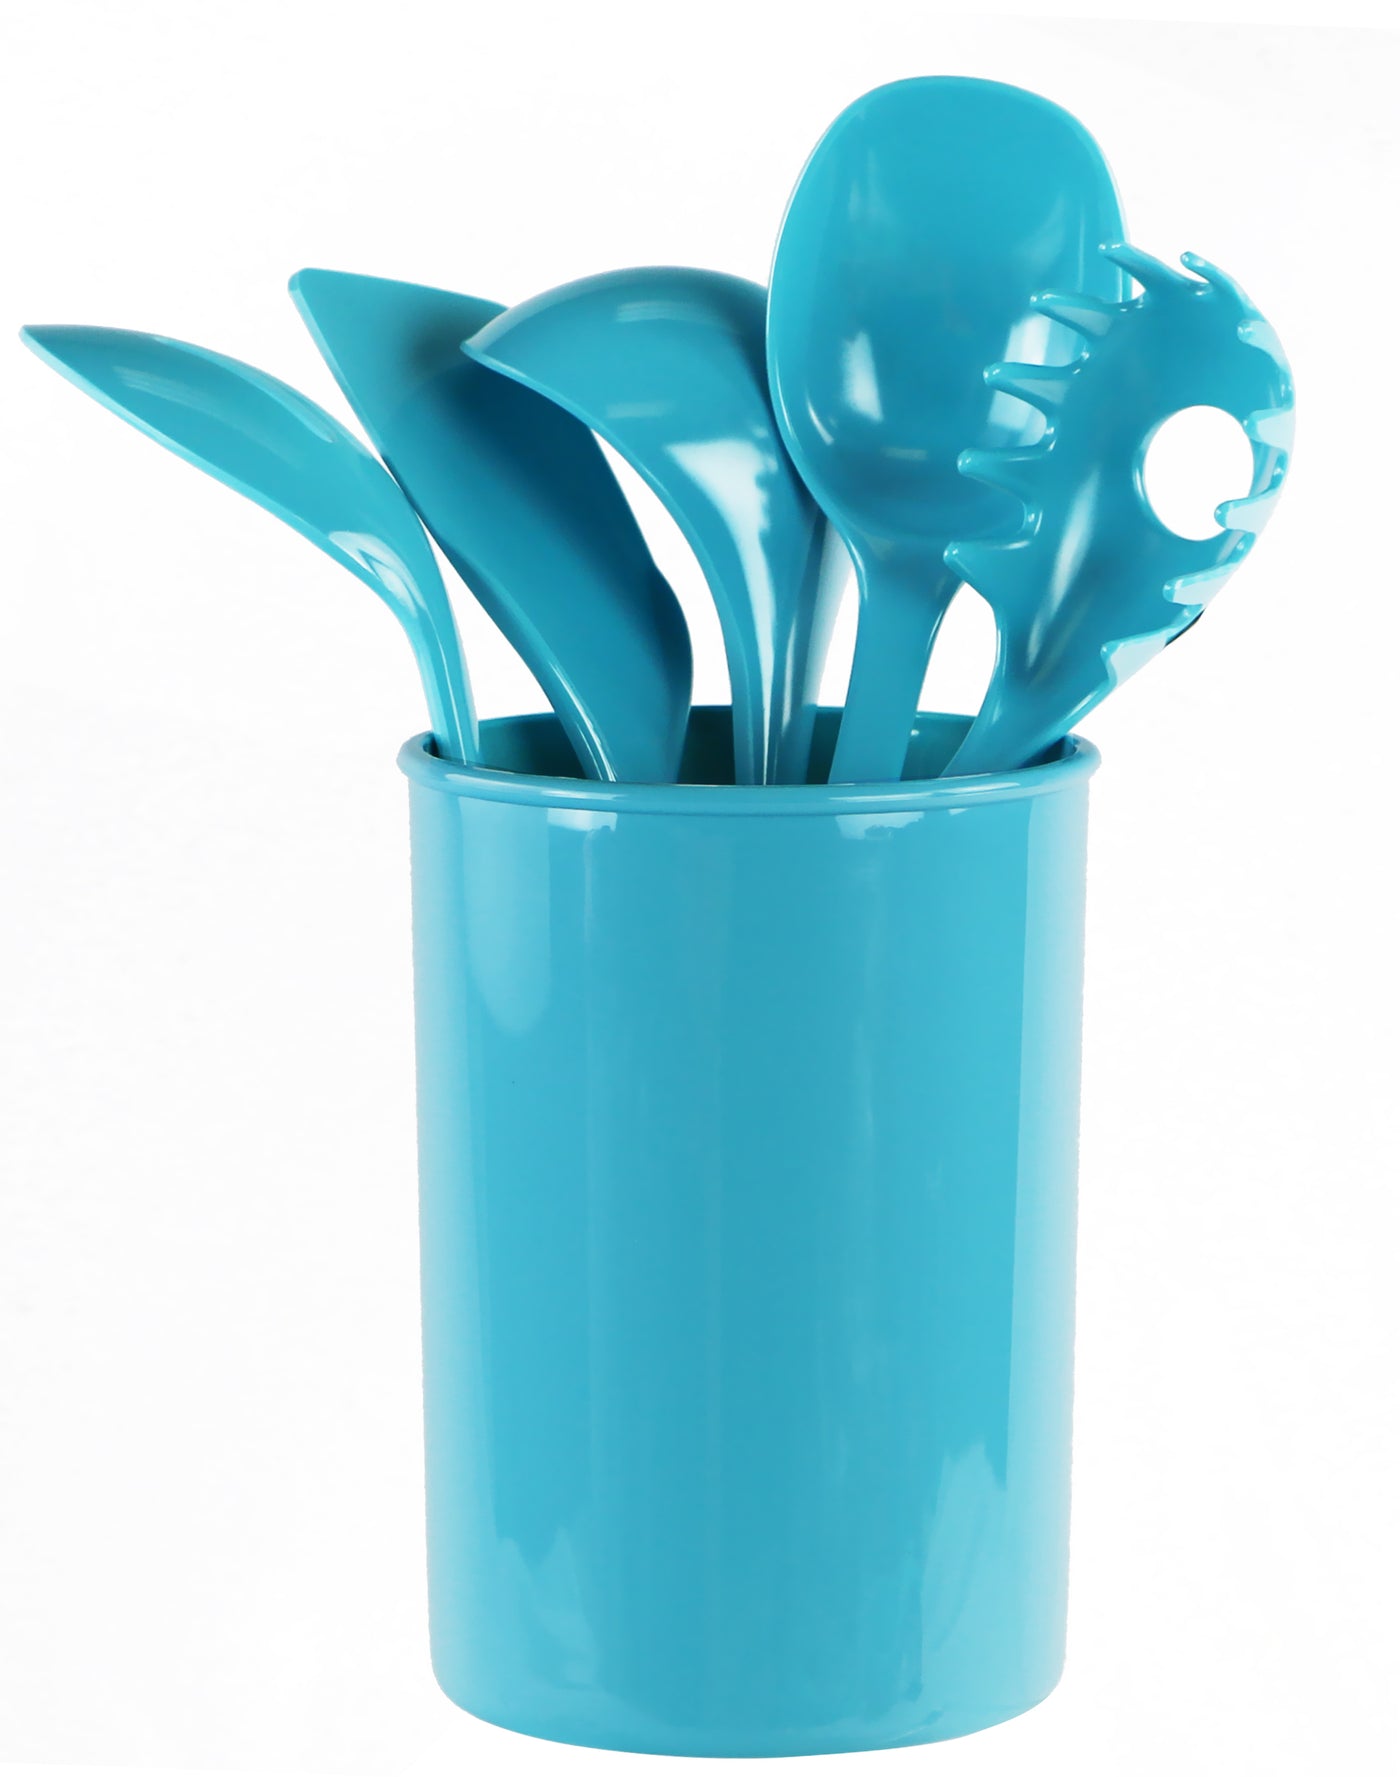 6pc Utensil Set, Turquoise – Reston Lloyd